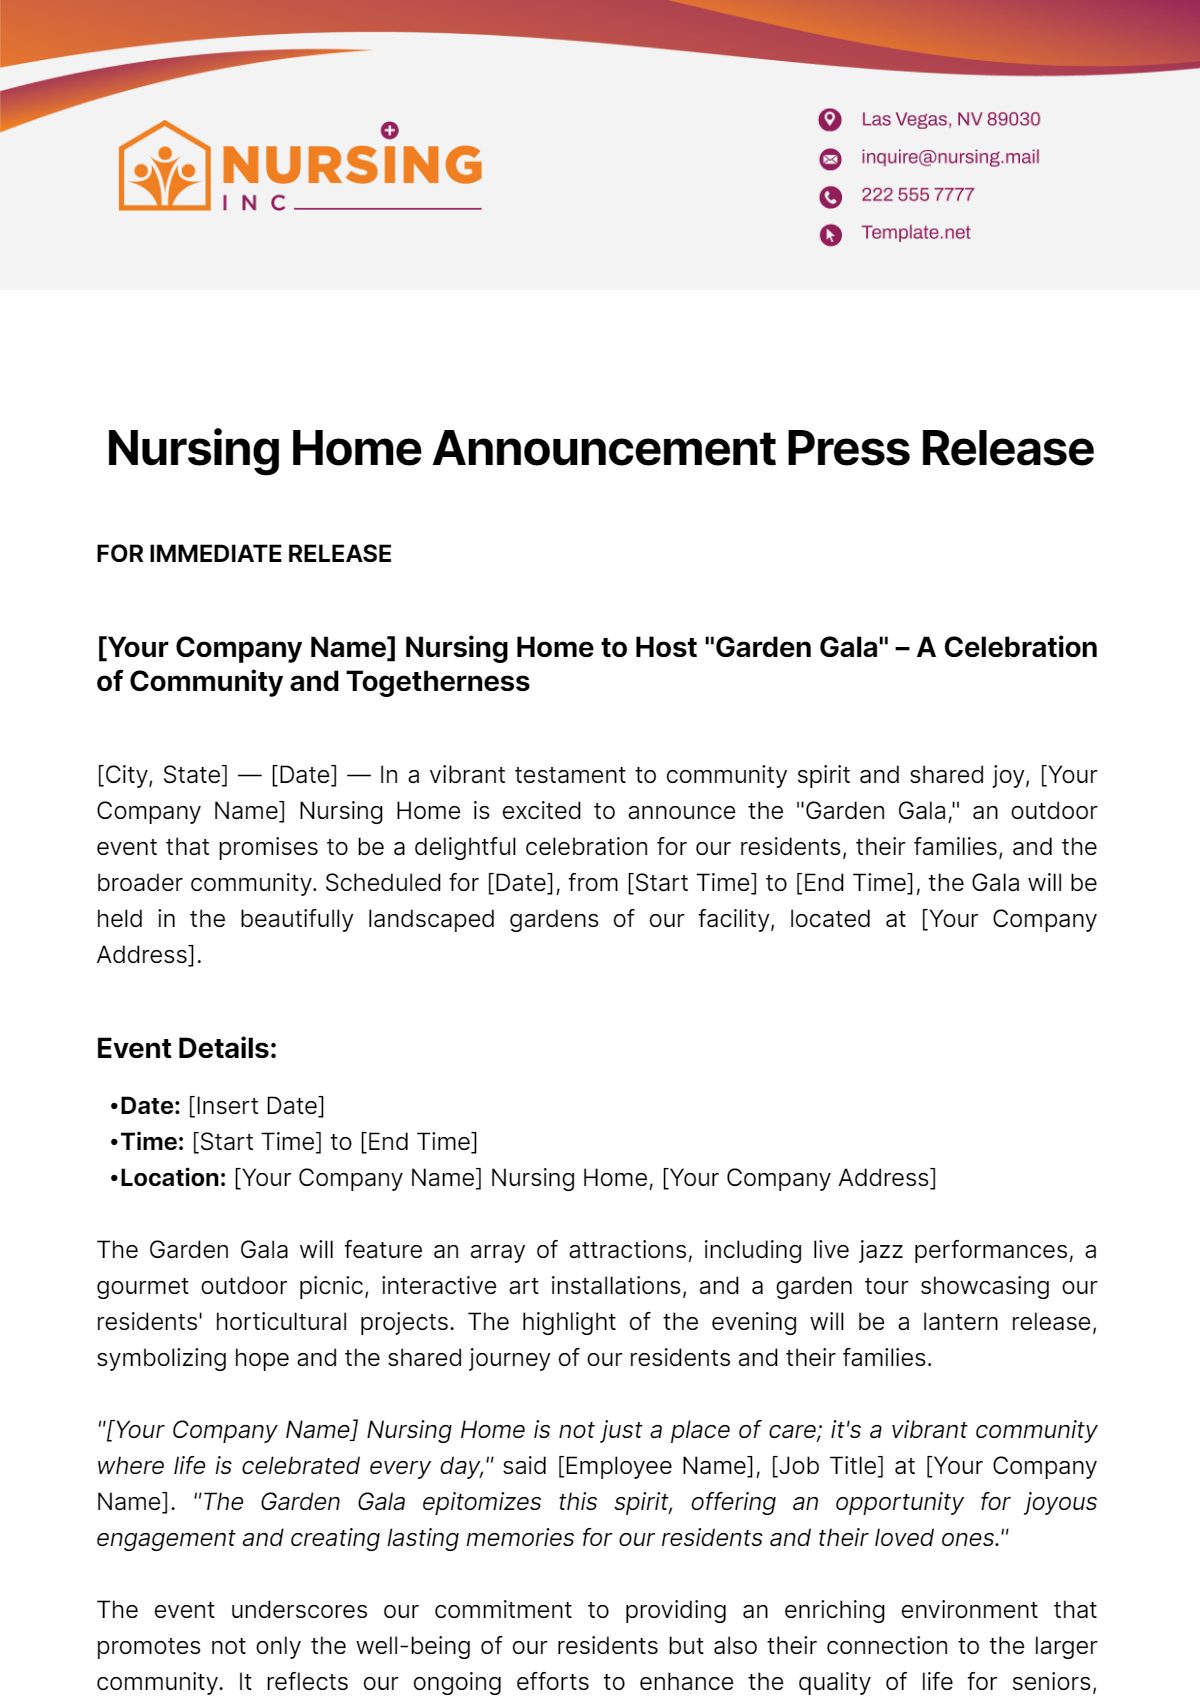 Nursing Home Announcement Press Release Template